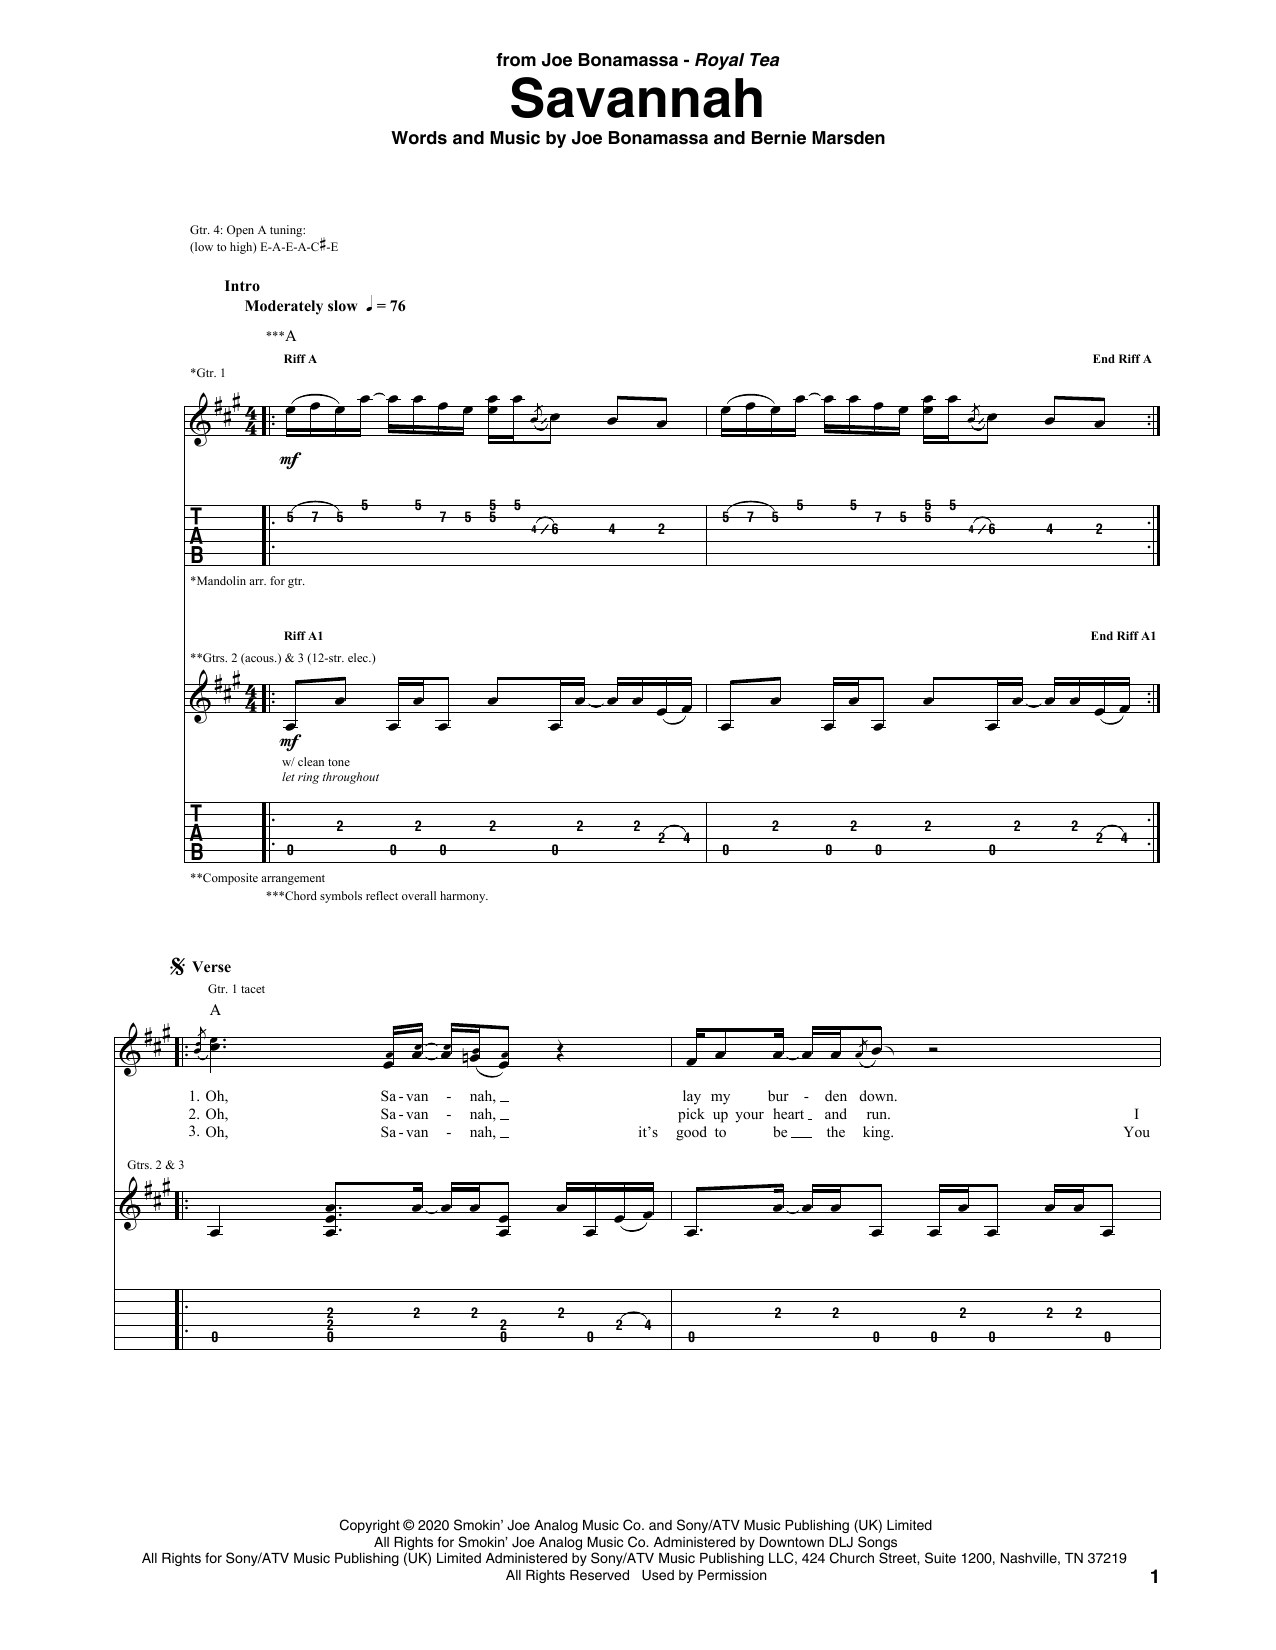 Joe Bonamassa Savannah Sheet Music Notes & Chords for Guitar Tab - Download or Print PDF